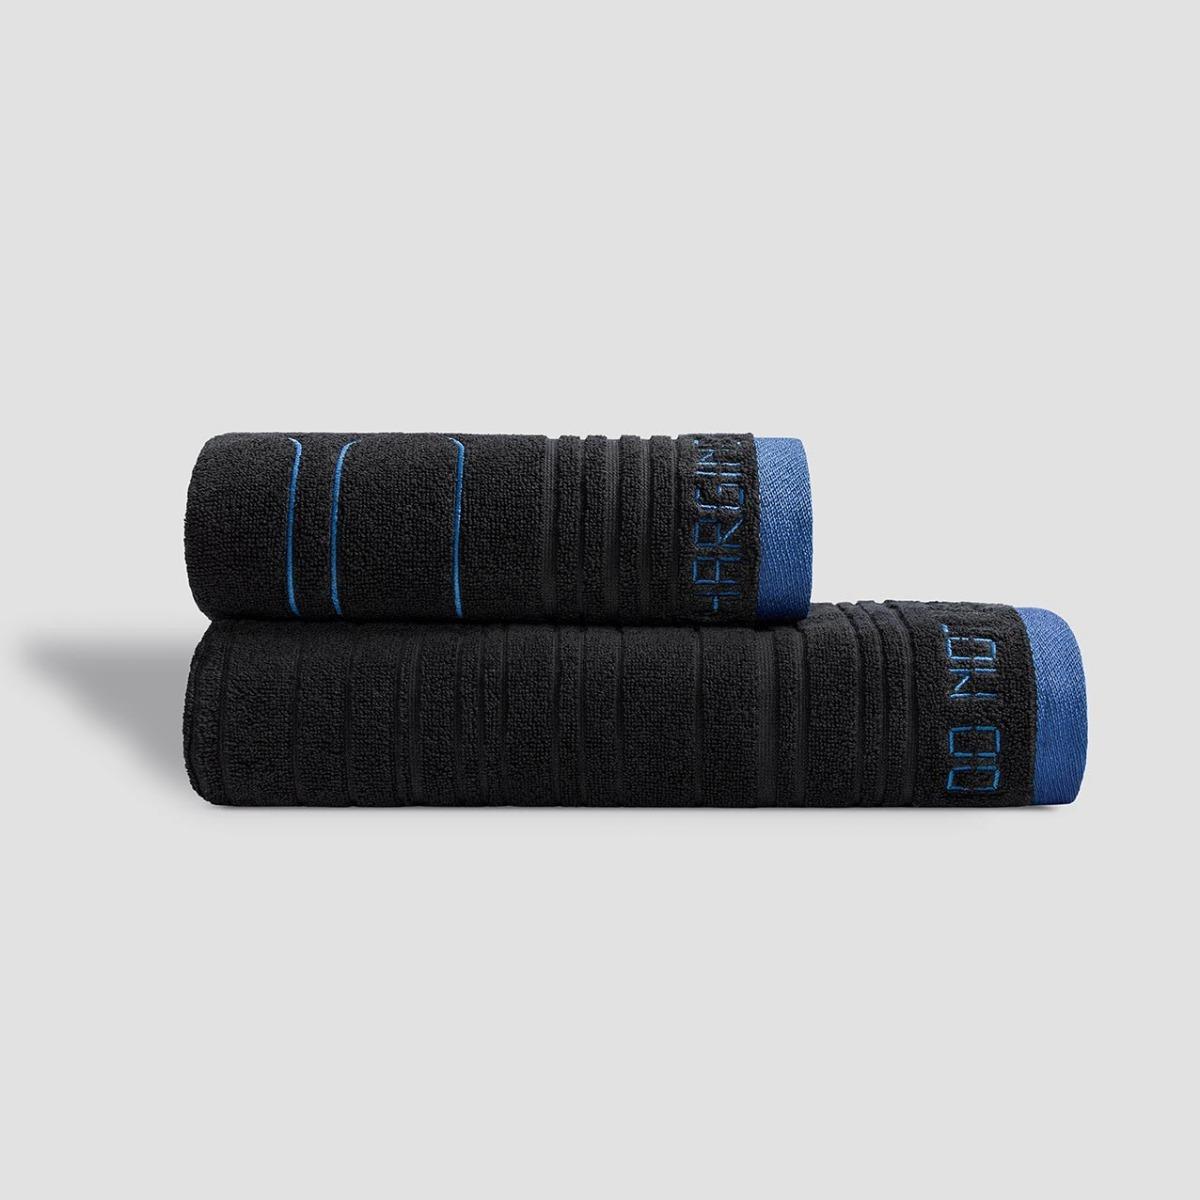 Полотенце Togas Макс чёрное с синим 70х140 см полотенце togas джаспер бел серый 70х140